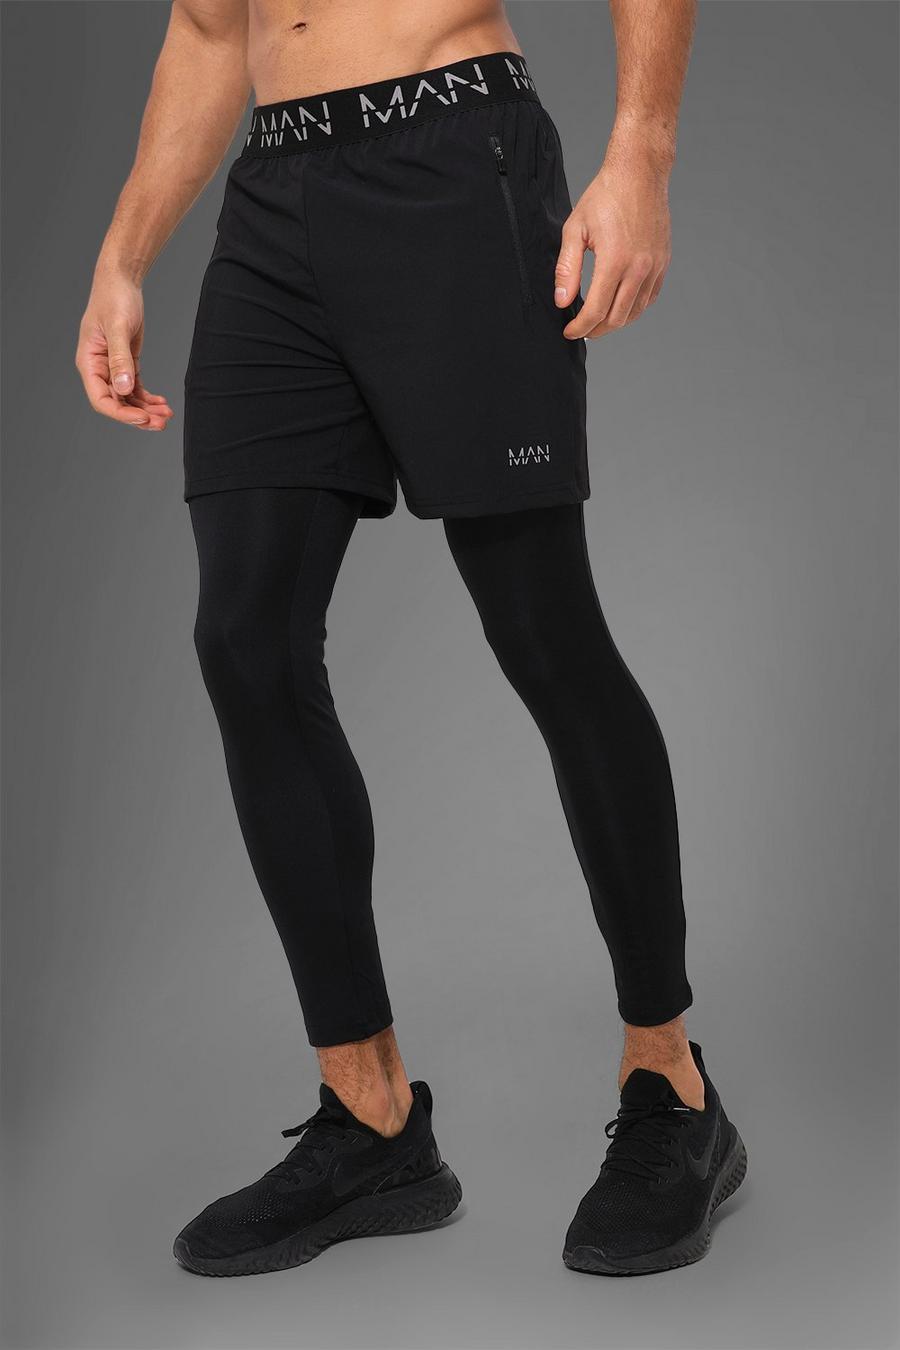 https://media.boohoo.com/i/boohoo/amm08956_black_xl/male-black-man-active-gym-2-in-1-legging-shorts/?w=900&qlt=default&fmt.jp2.qlt=70&fmt=auto&sm=fit